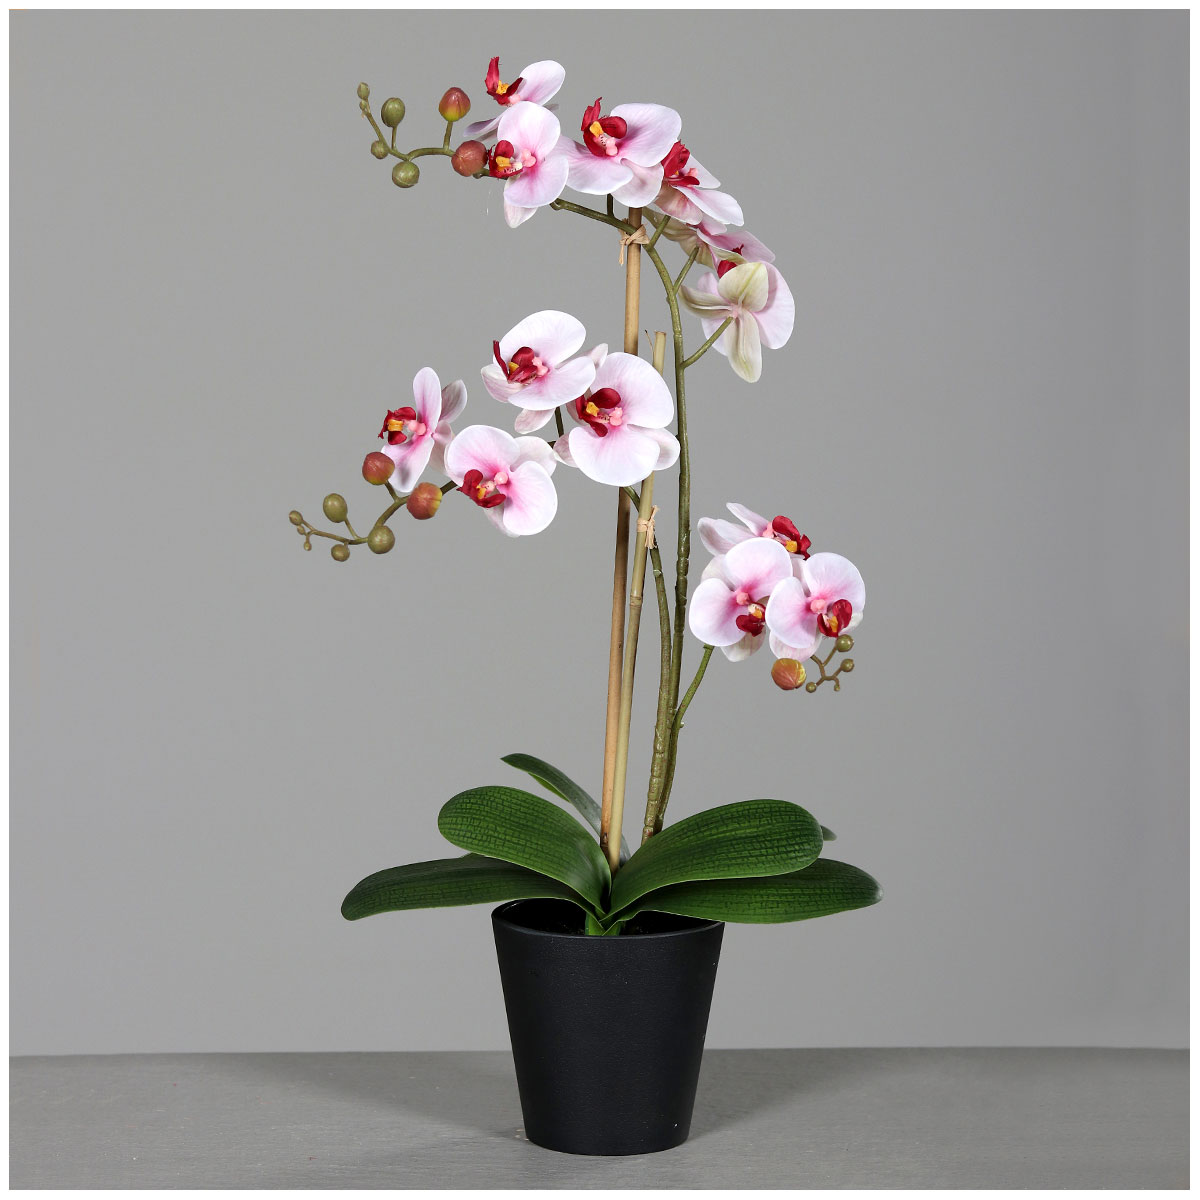 Orchidee mit drei Rispen, im schwarzen Kunstofftopf, 56 cm, white-rosa